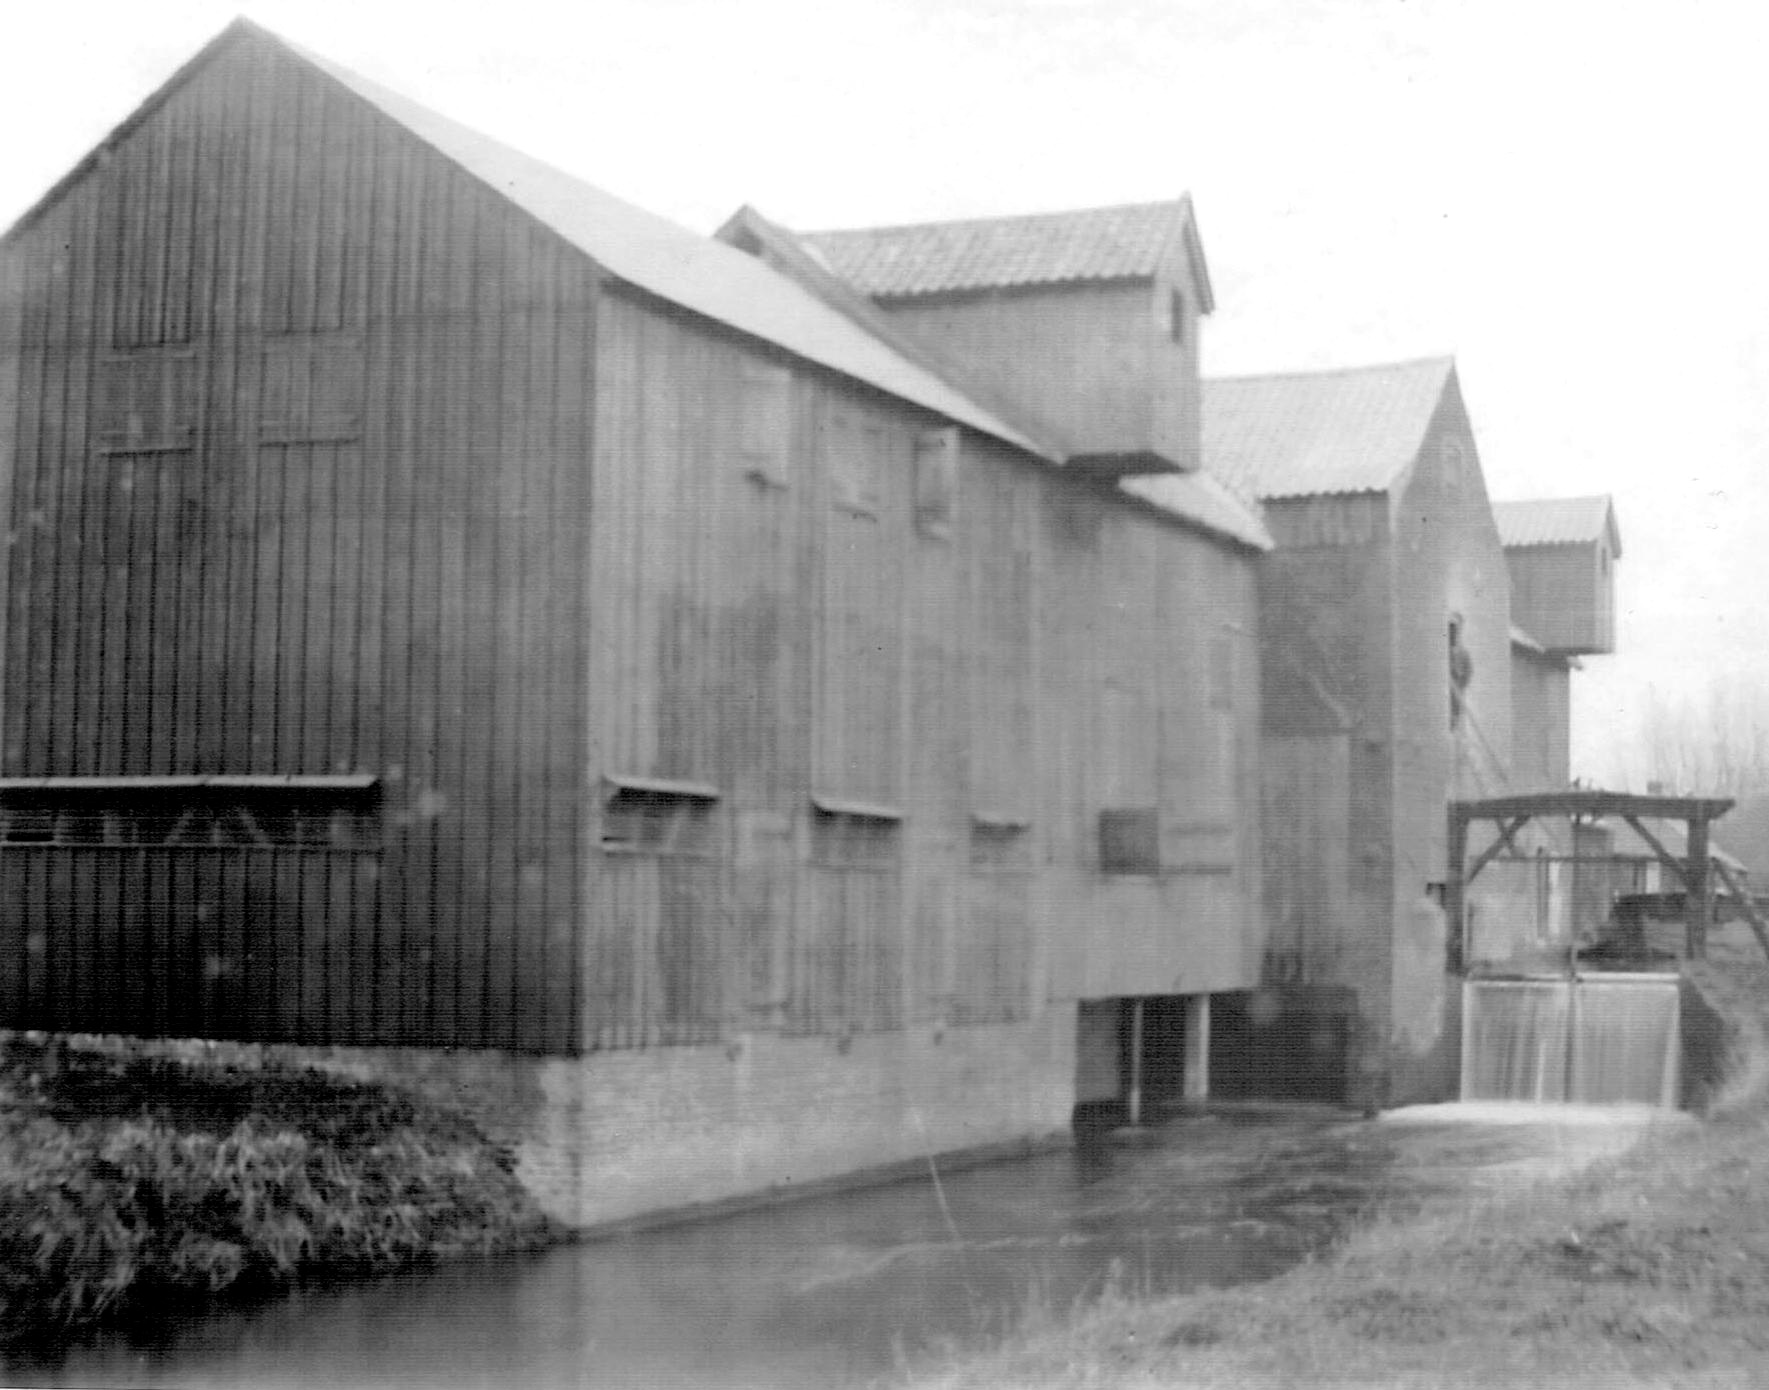 Bone Mill Historic Image 1880